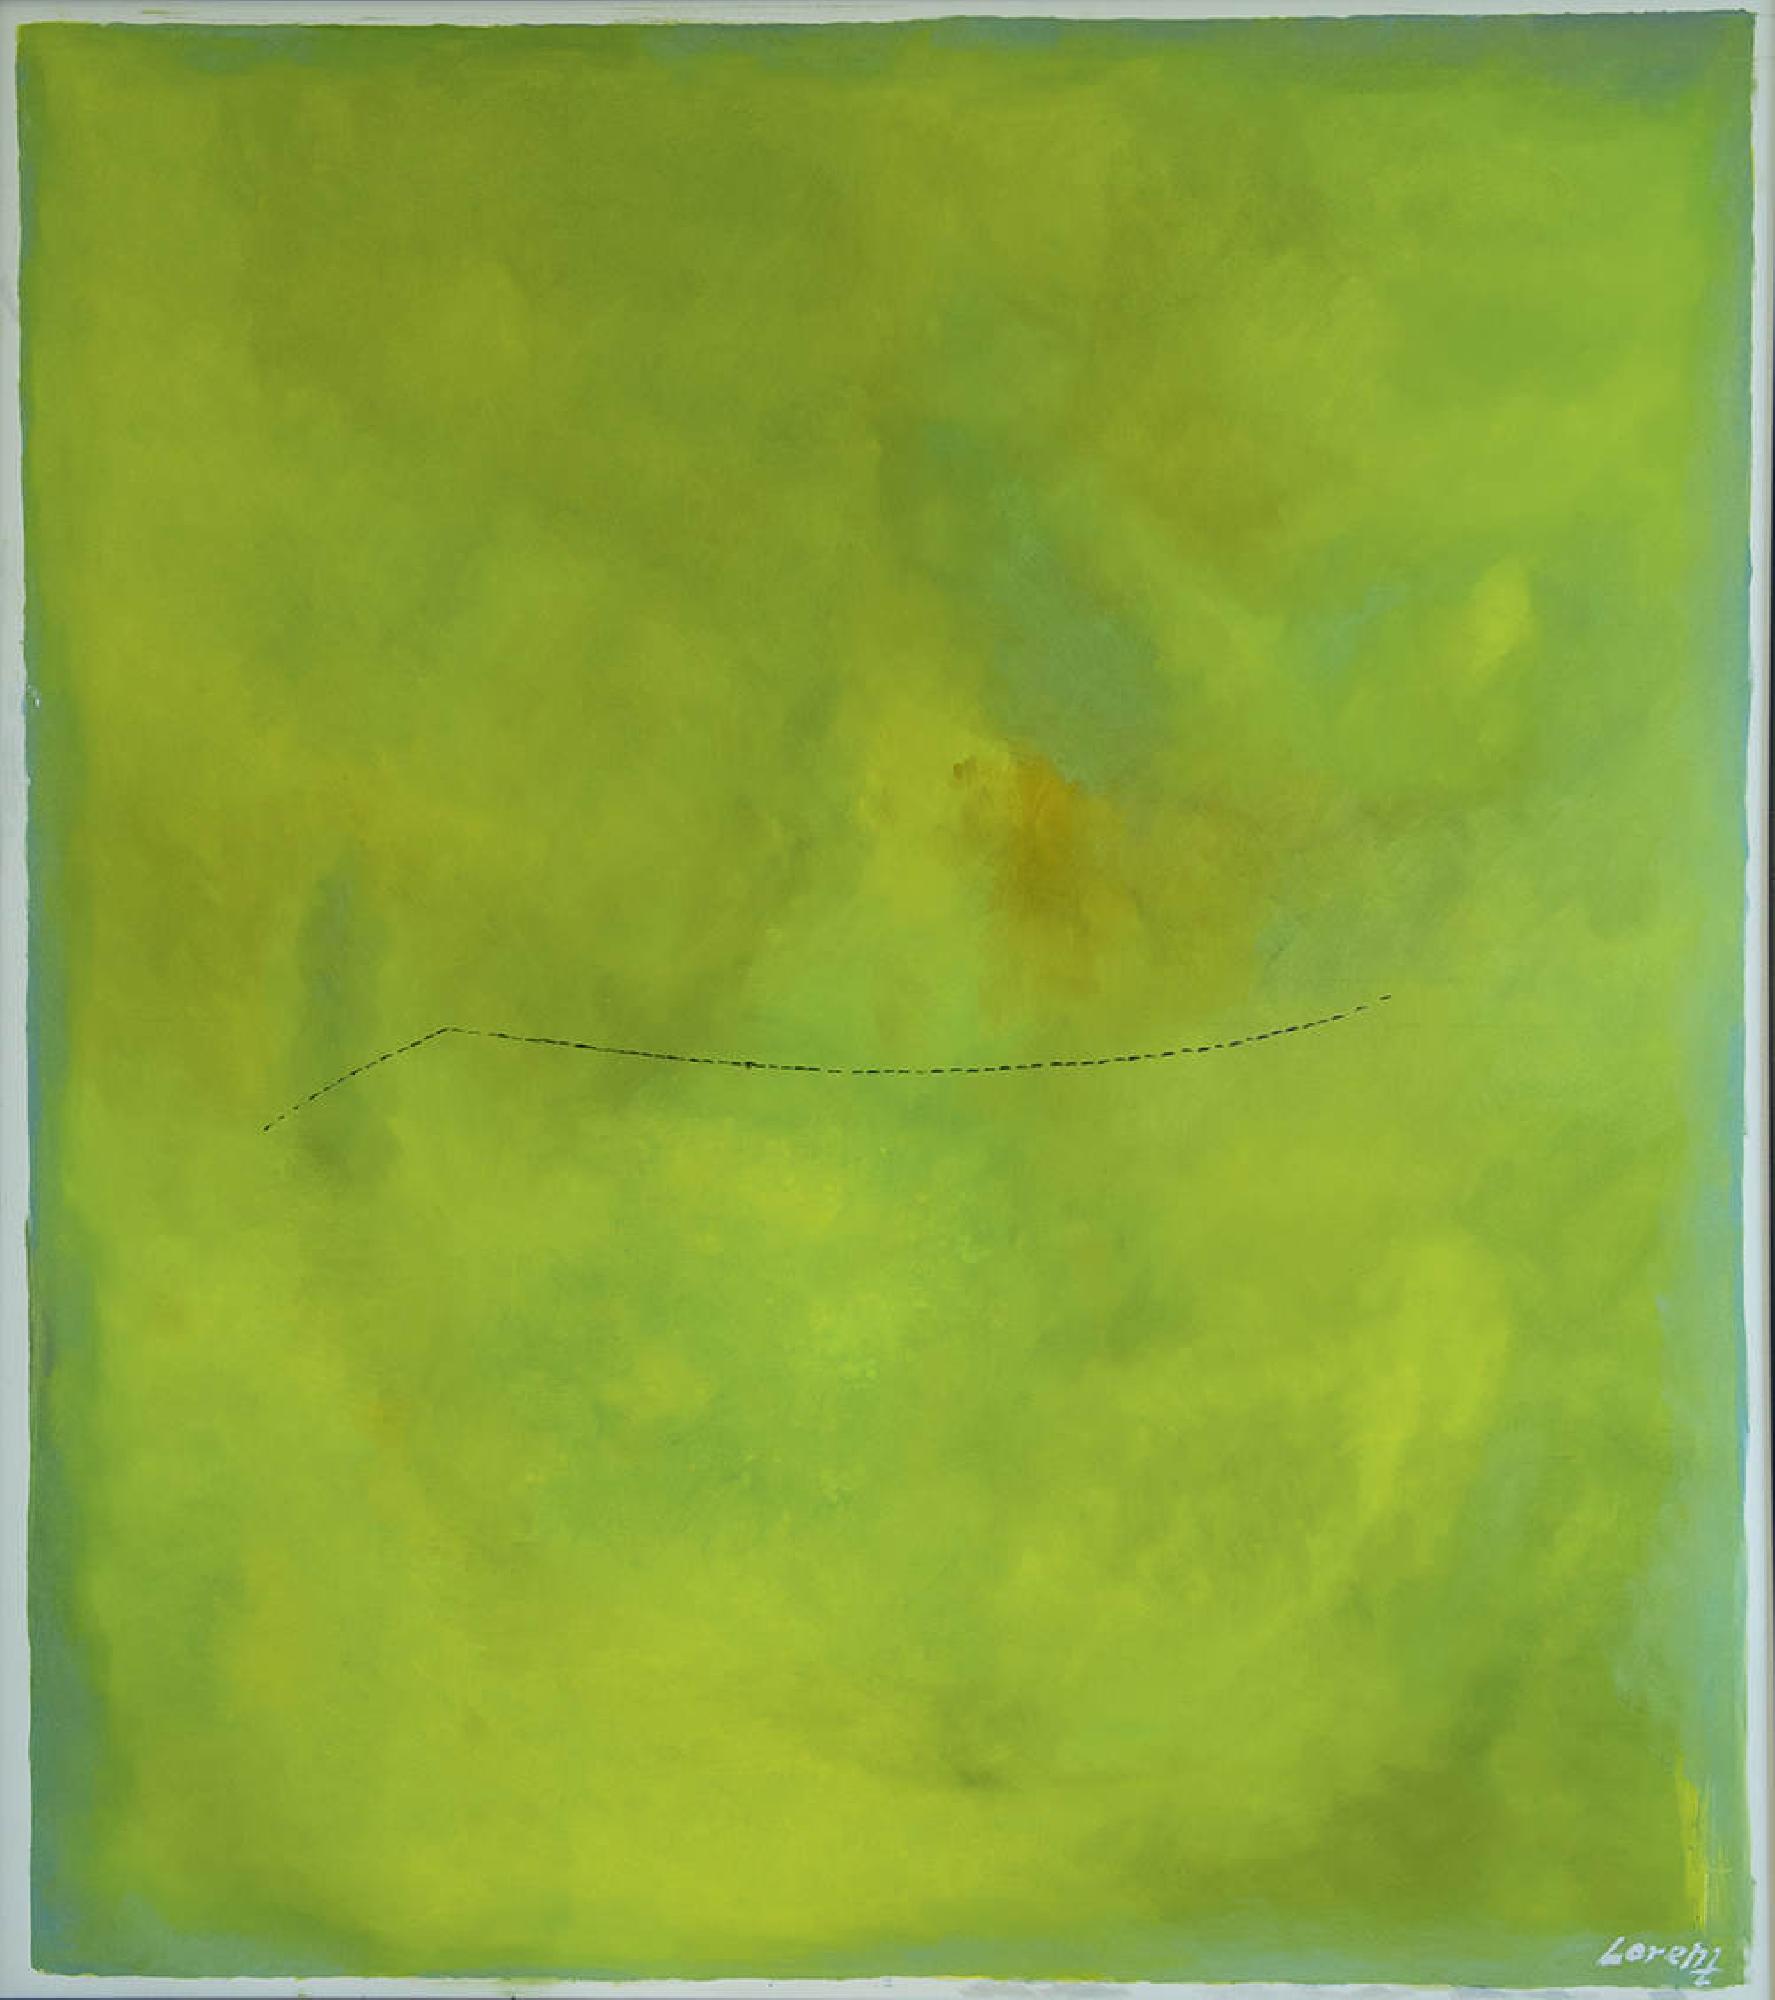 Leonard Lorenz: Without title
2011
160 × 180 cm
Oil on canvas